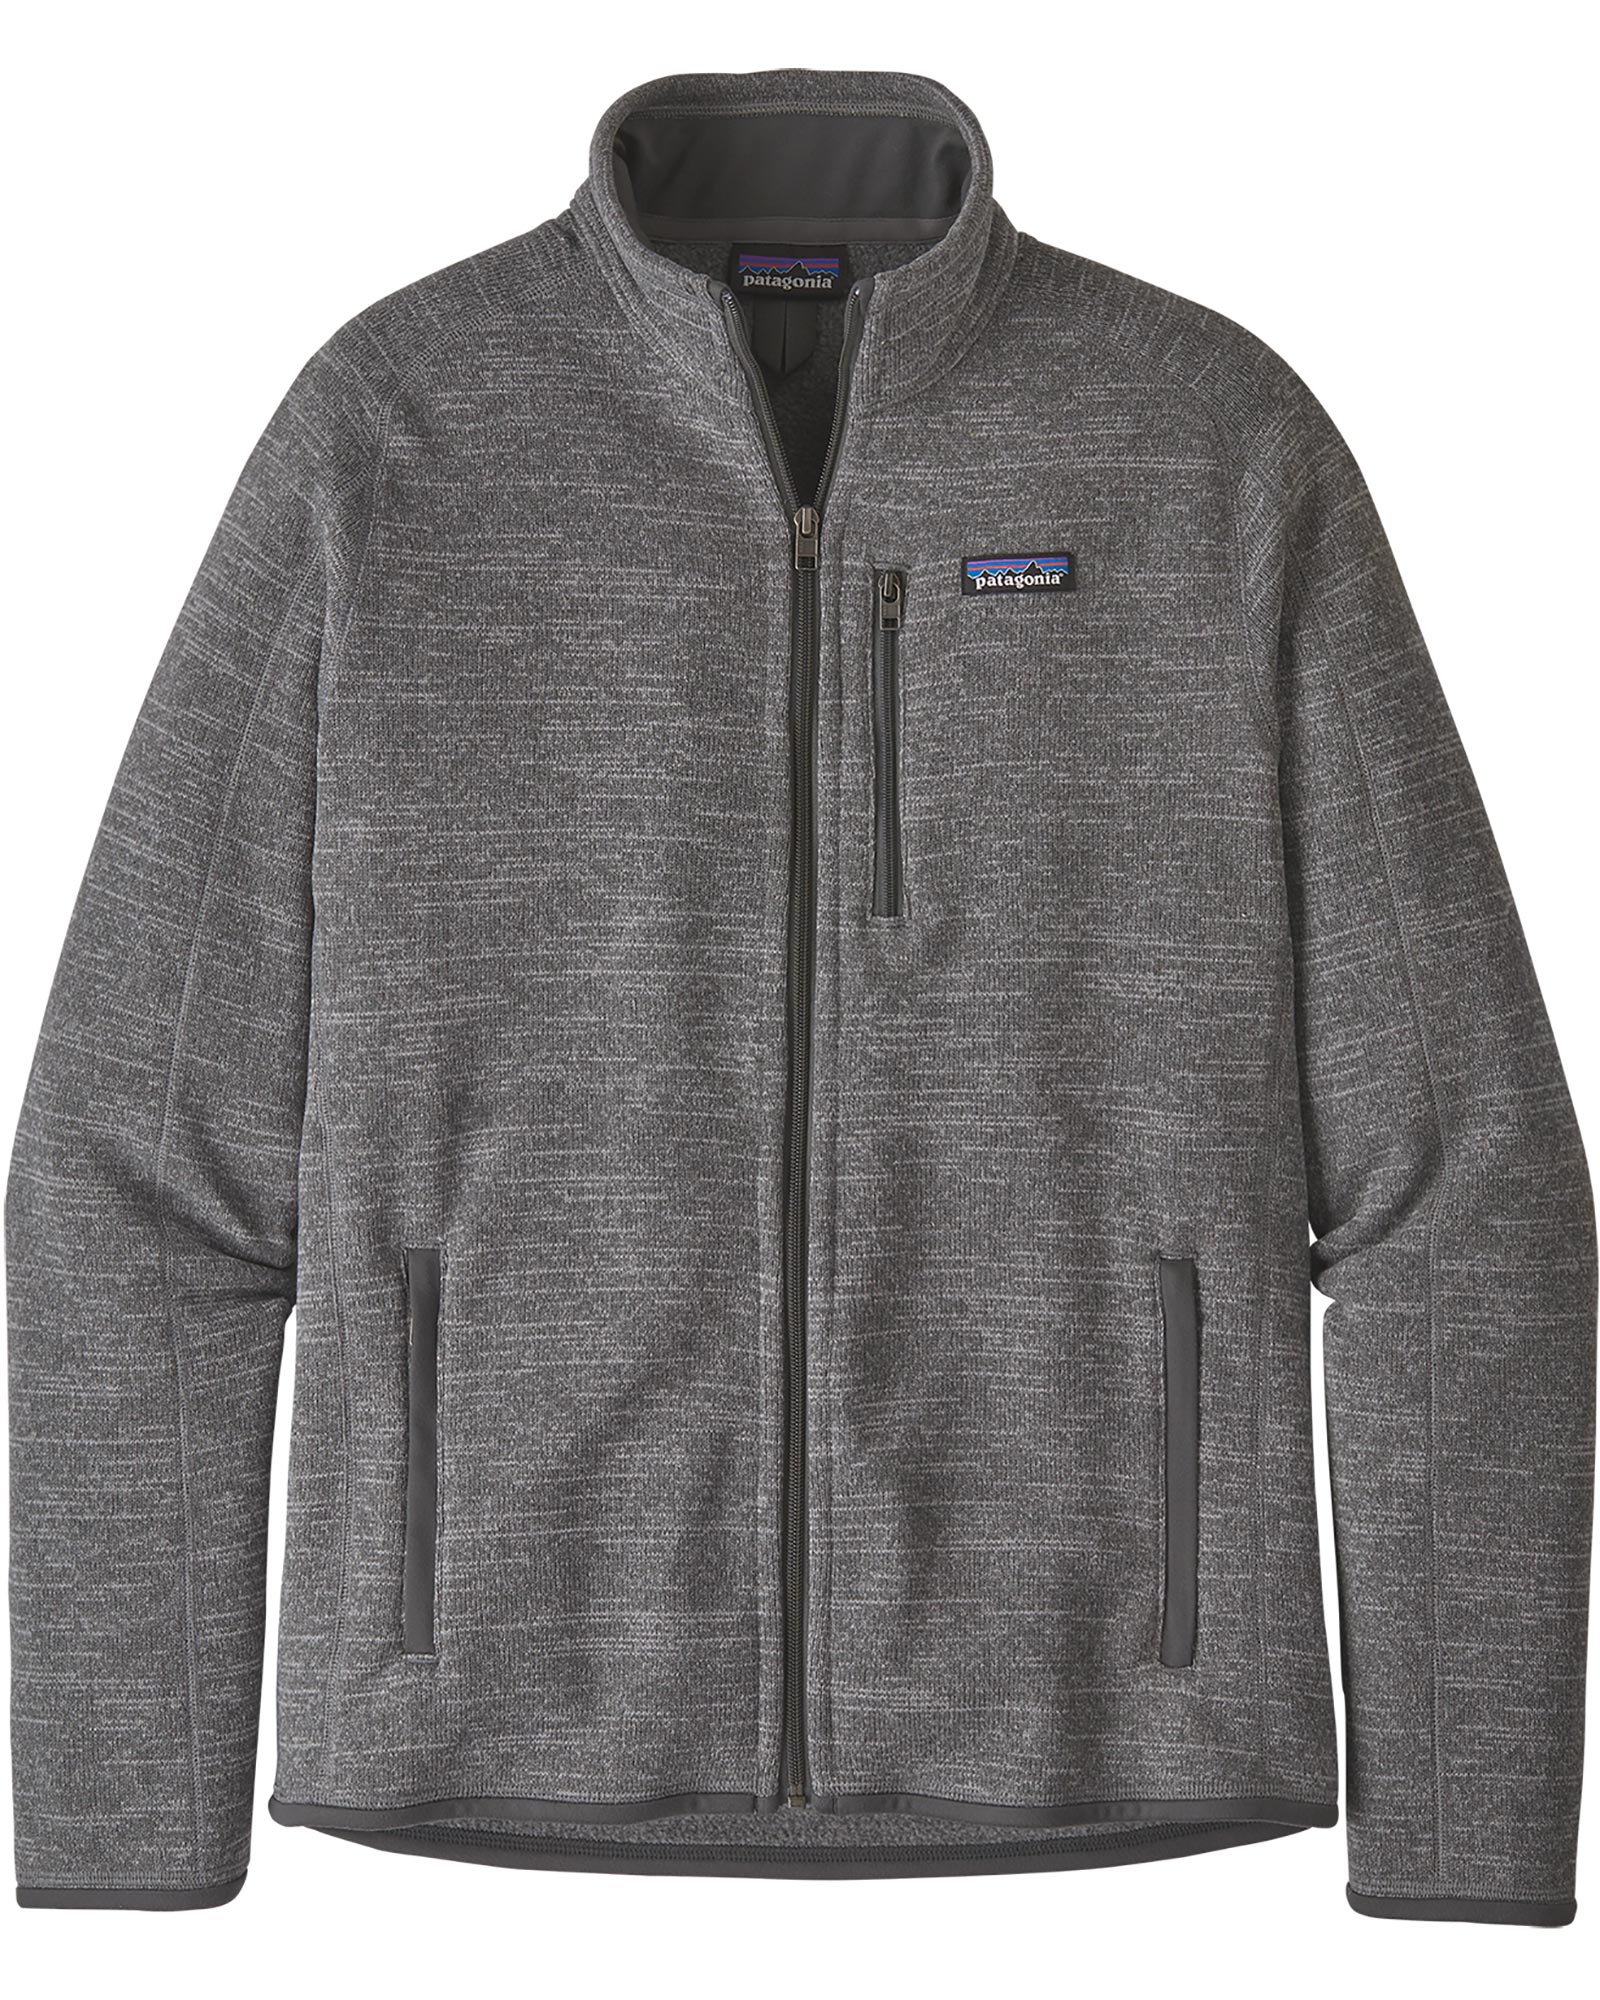 Patagonia Better Sweater Men’s Jacket - Nickle XL